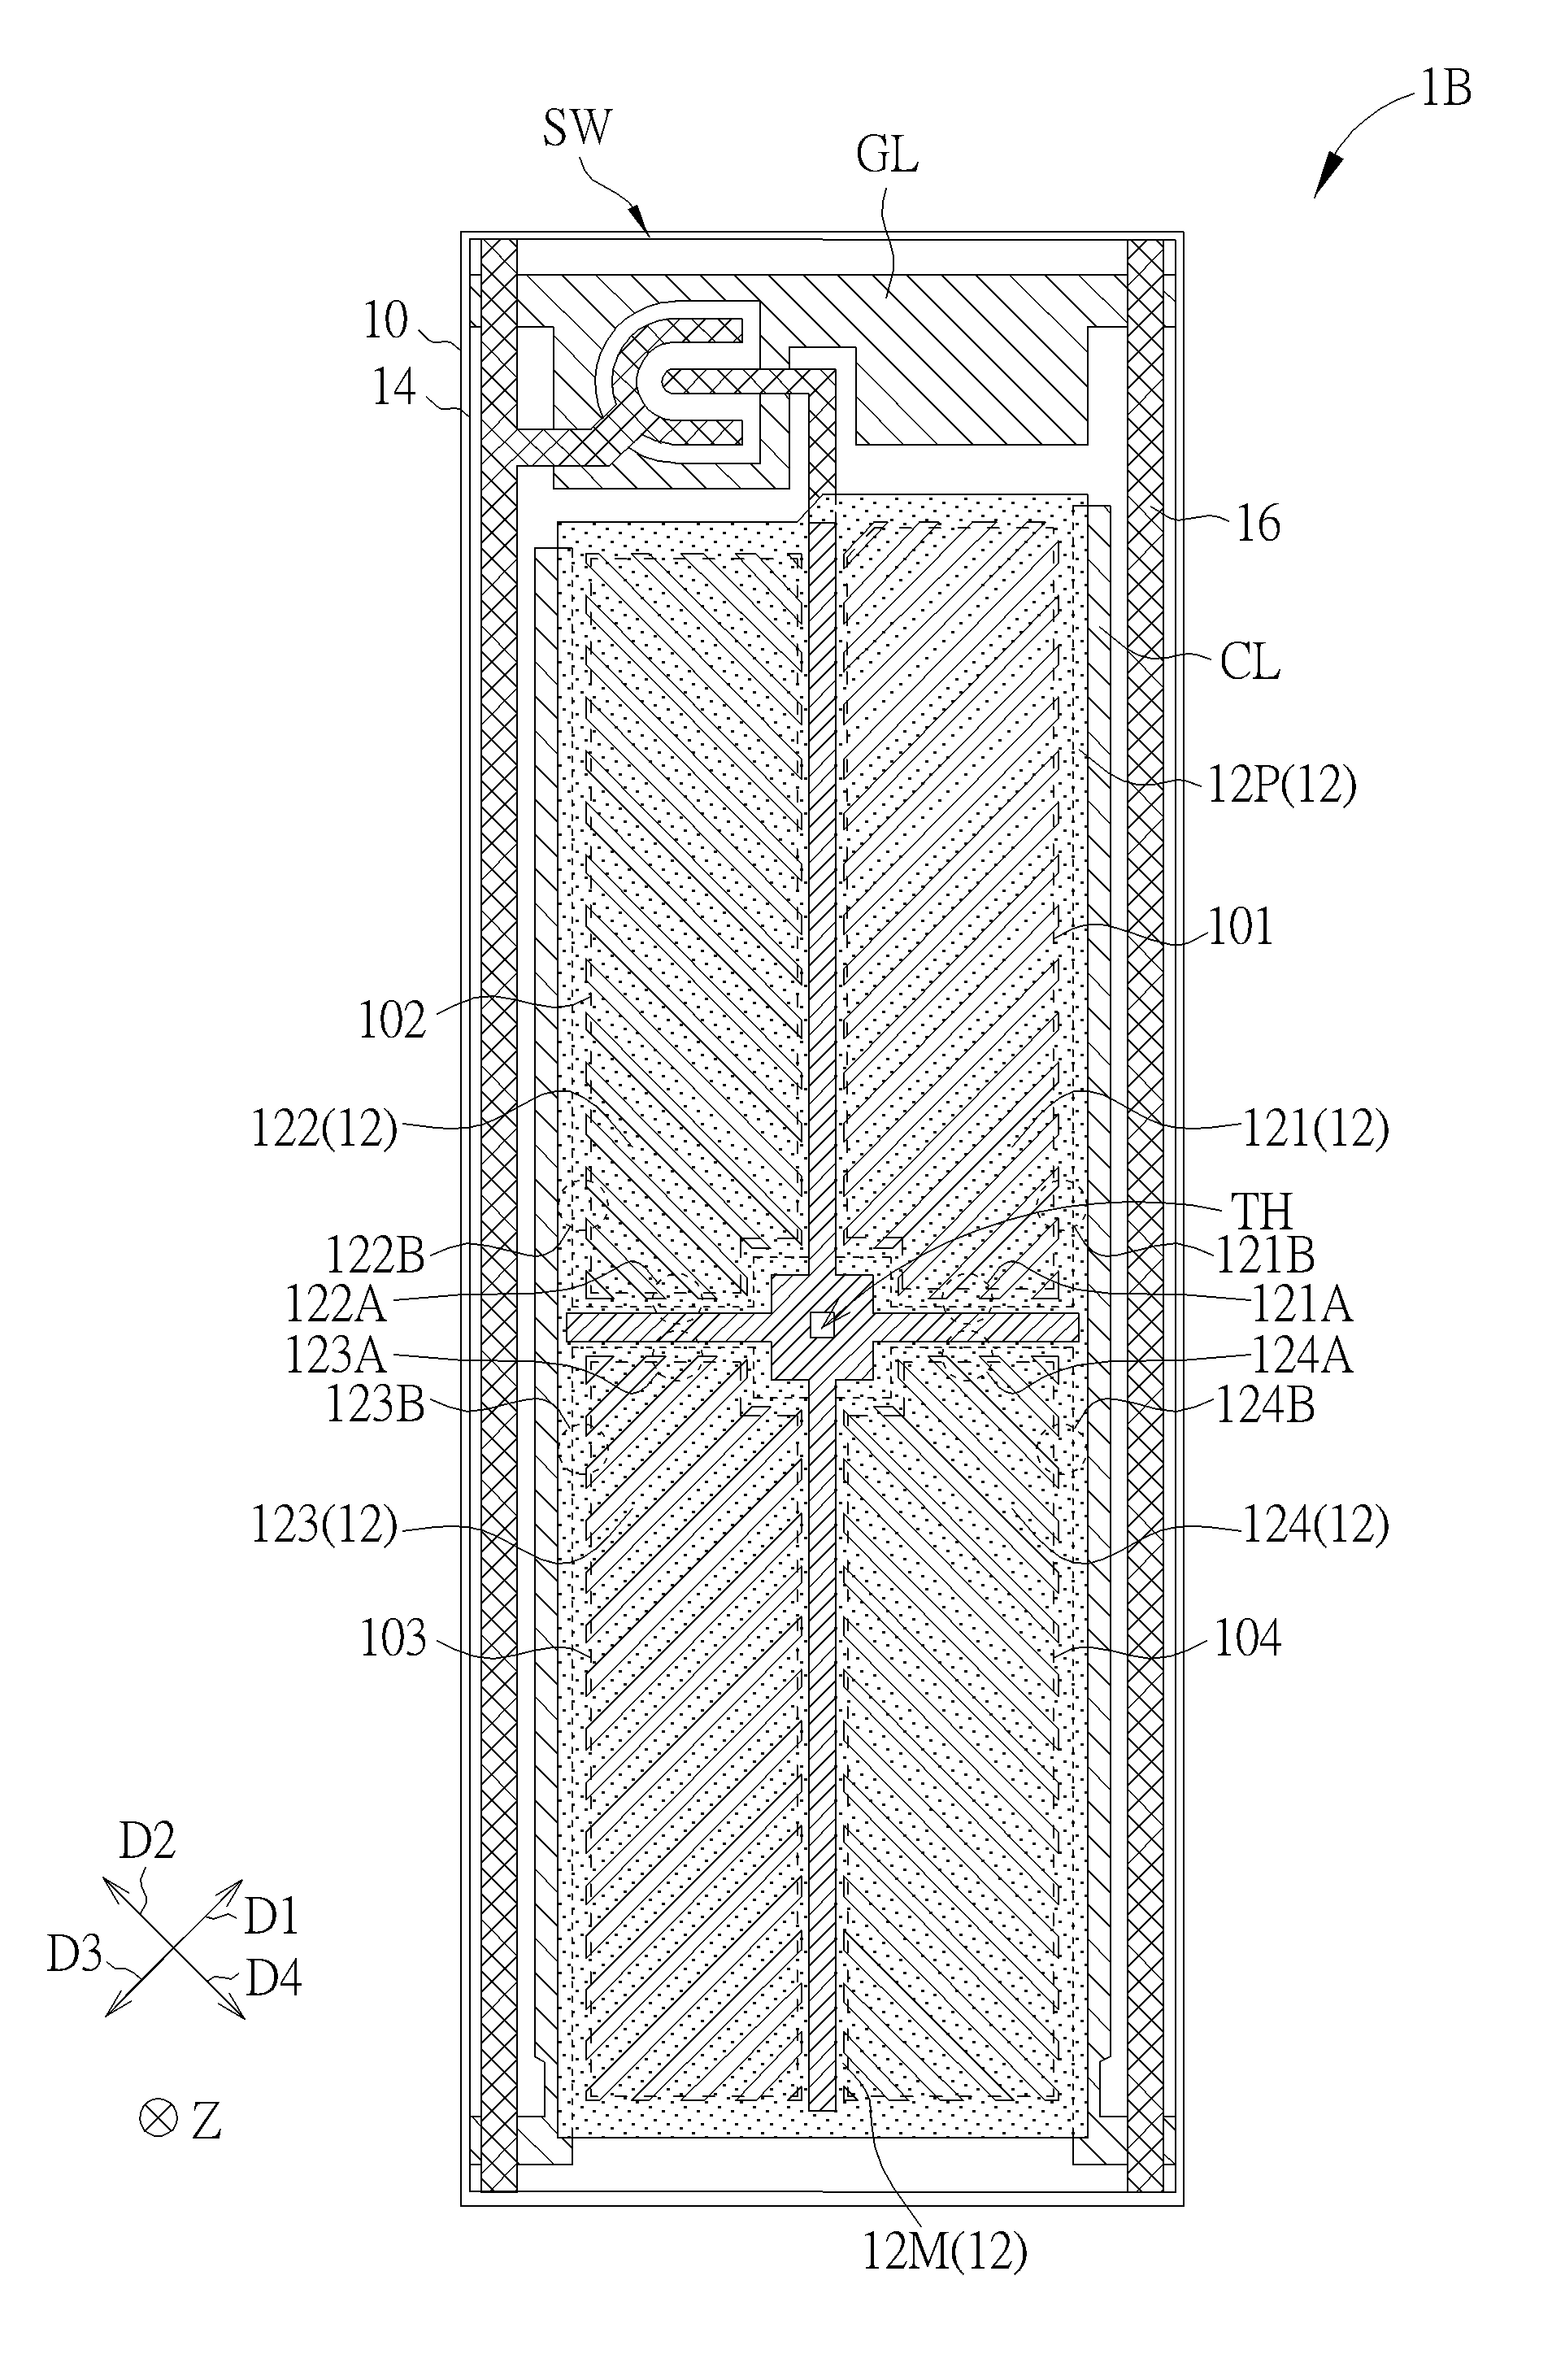 Pixel structure of display panel